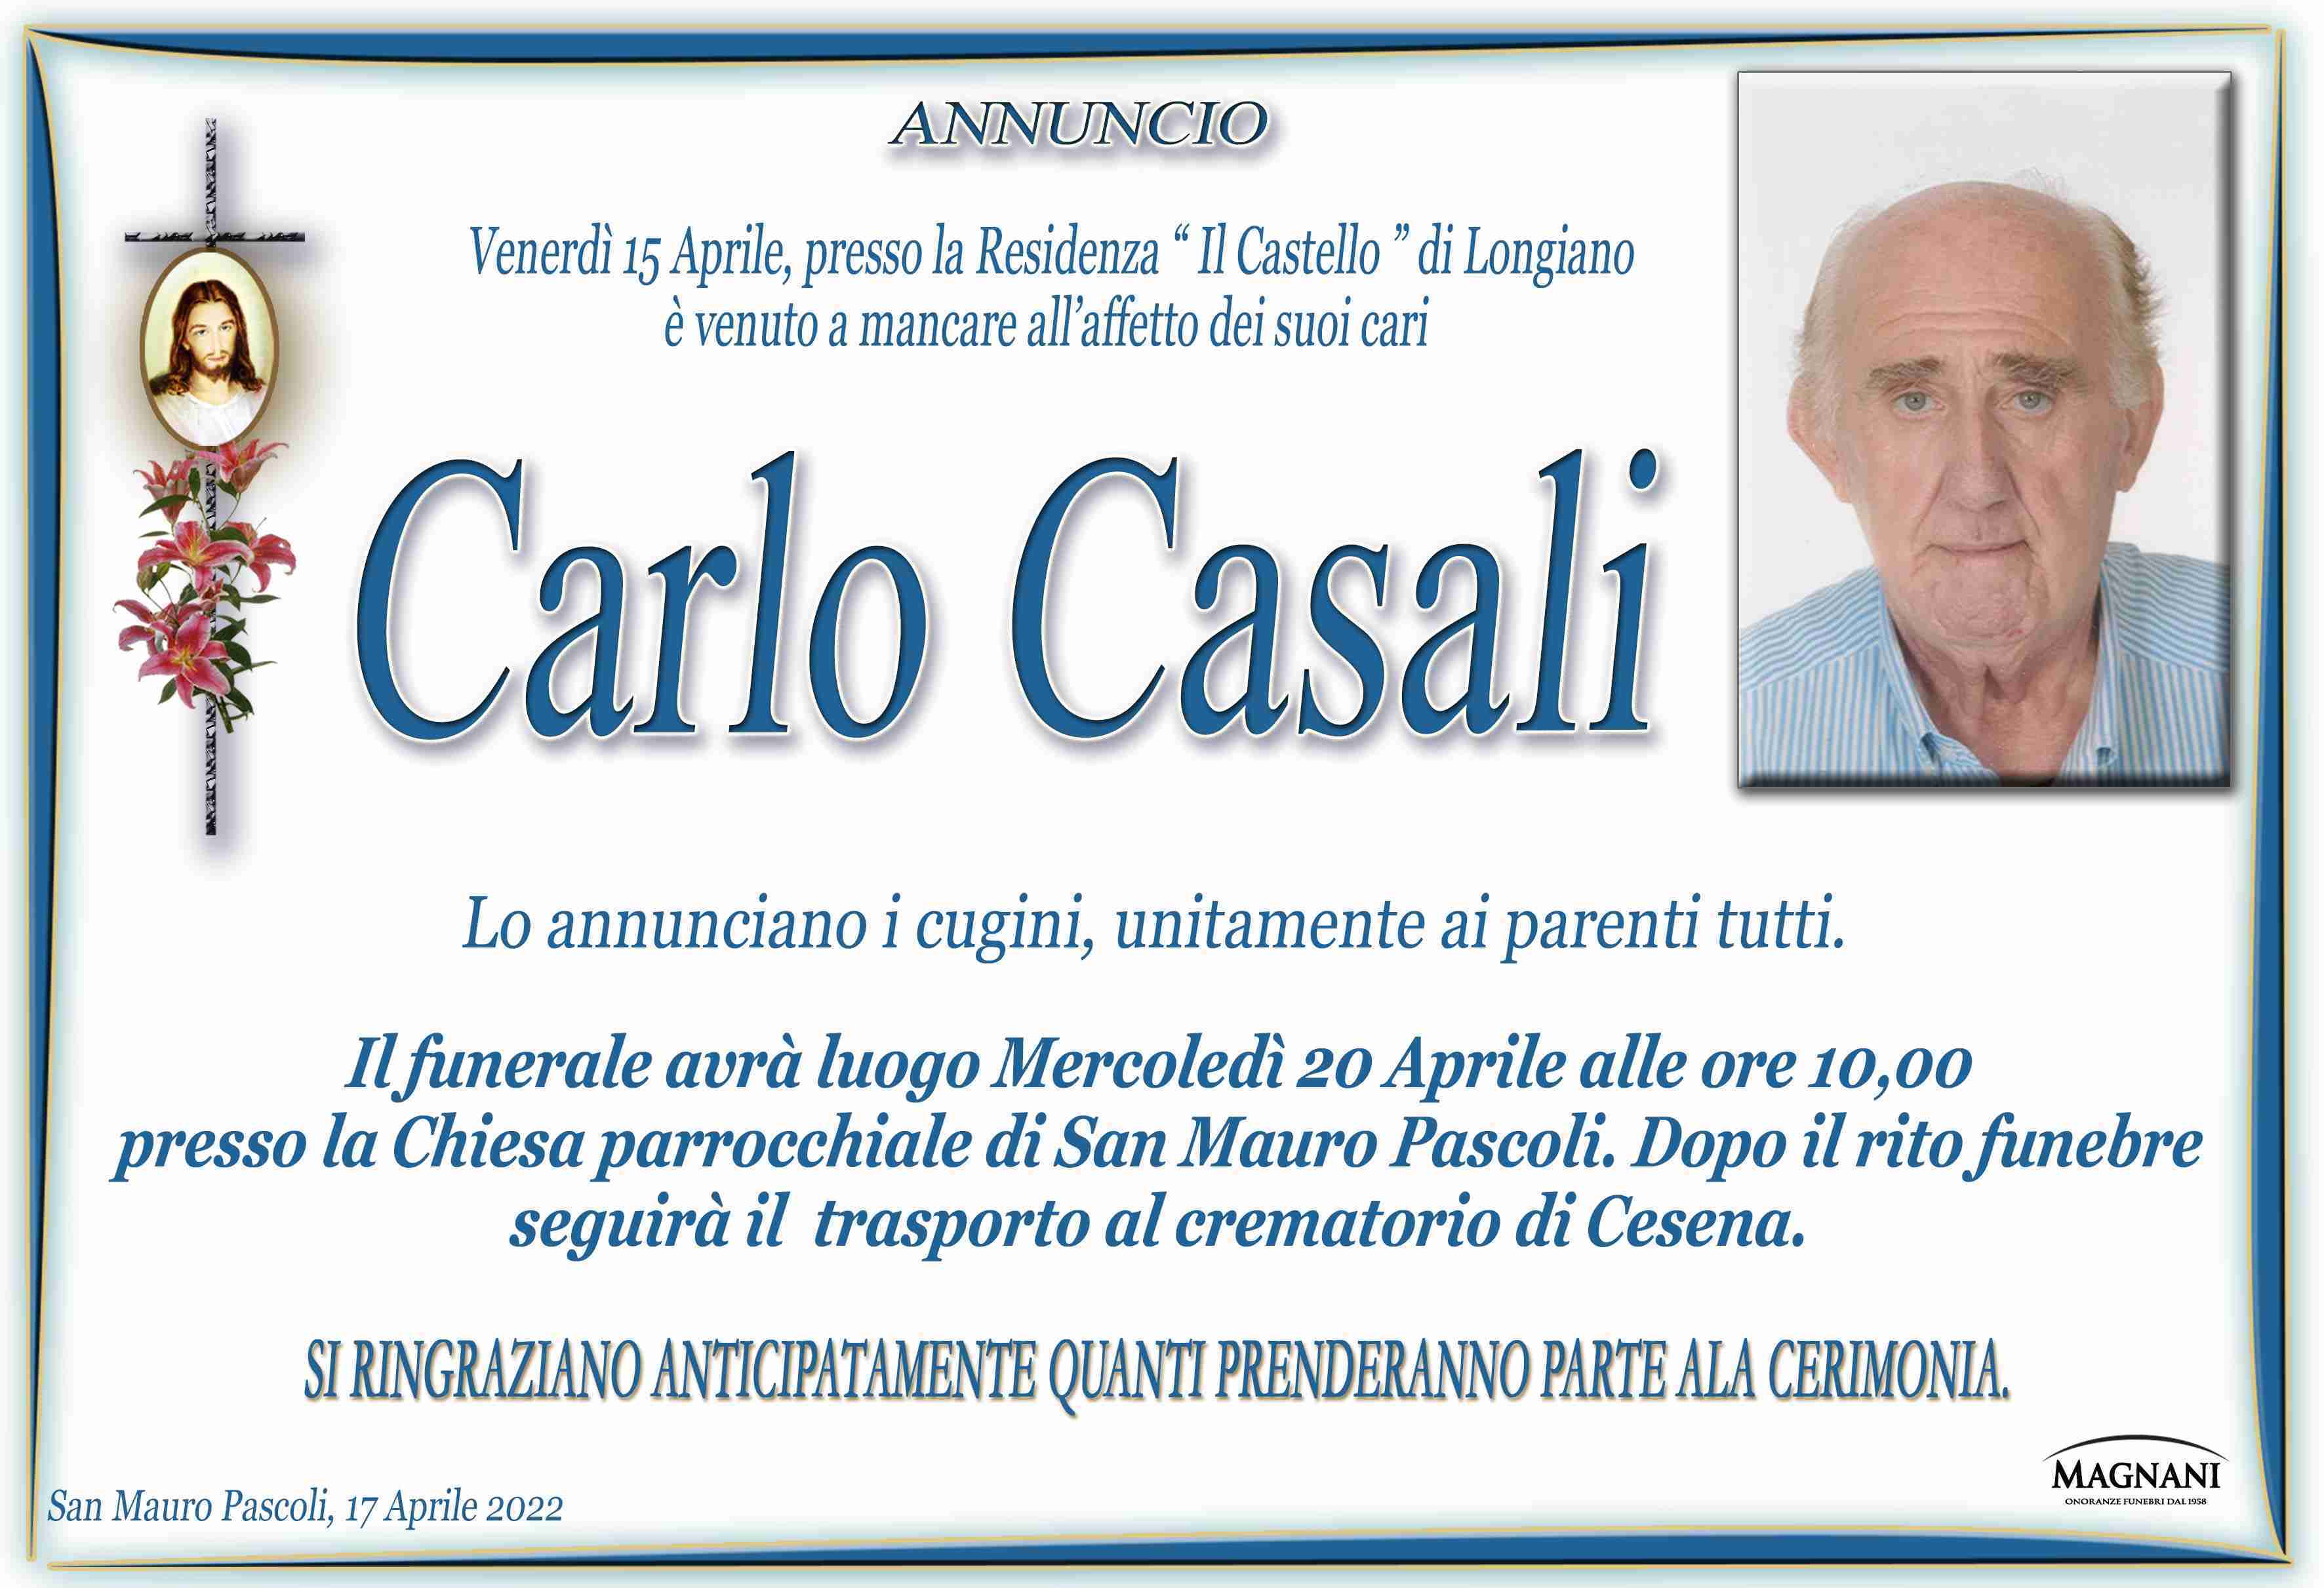 Carlo Casali